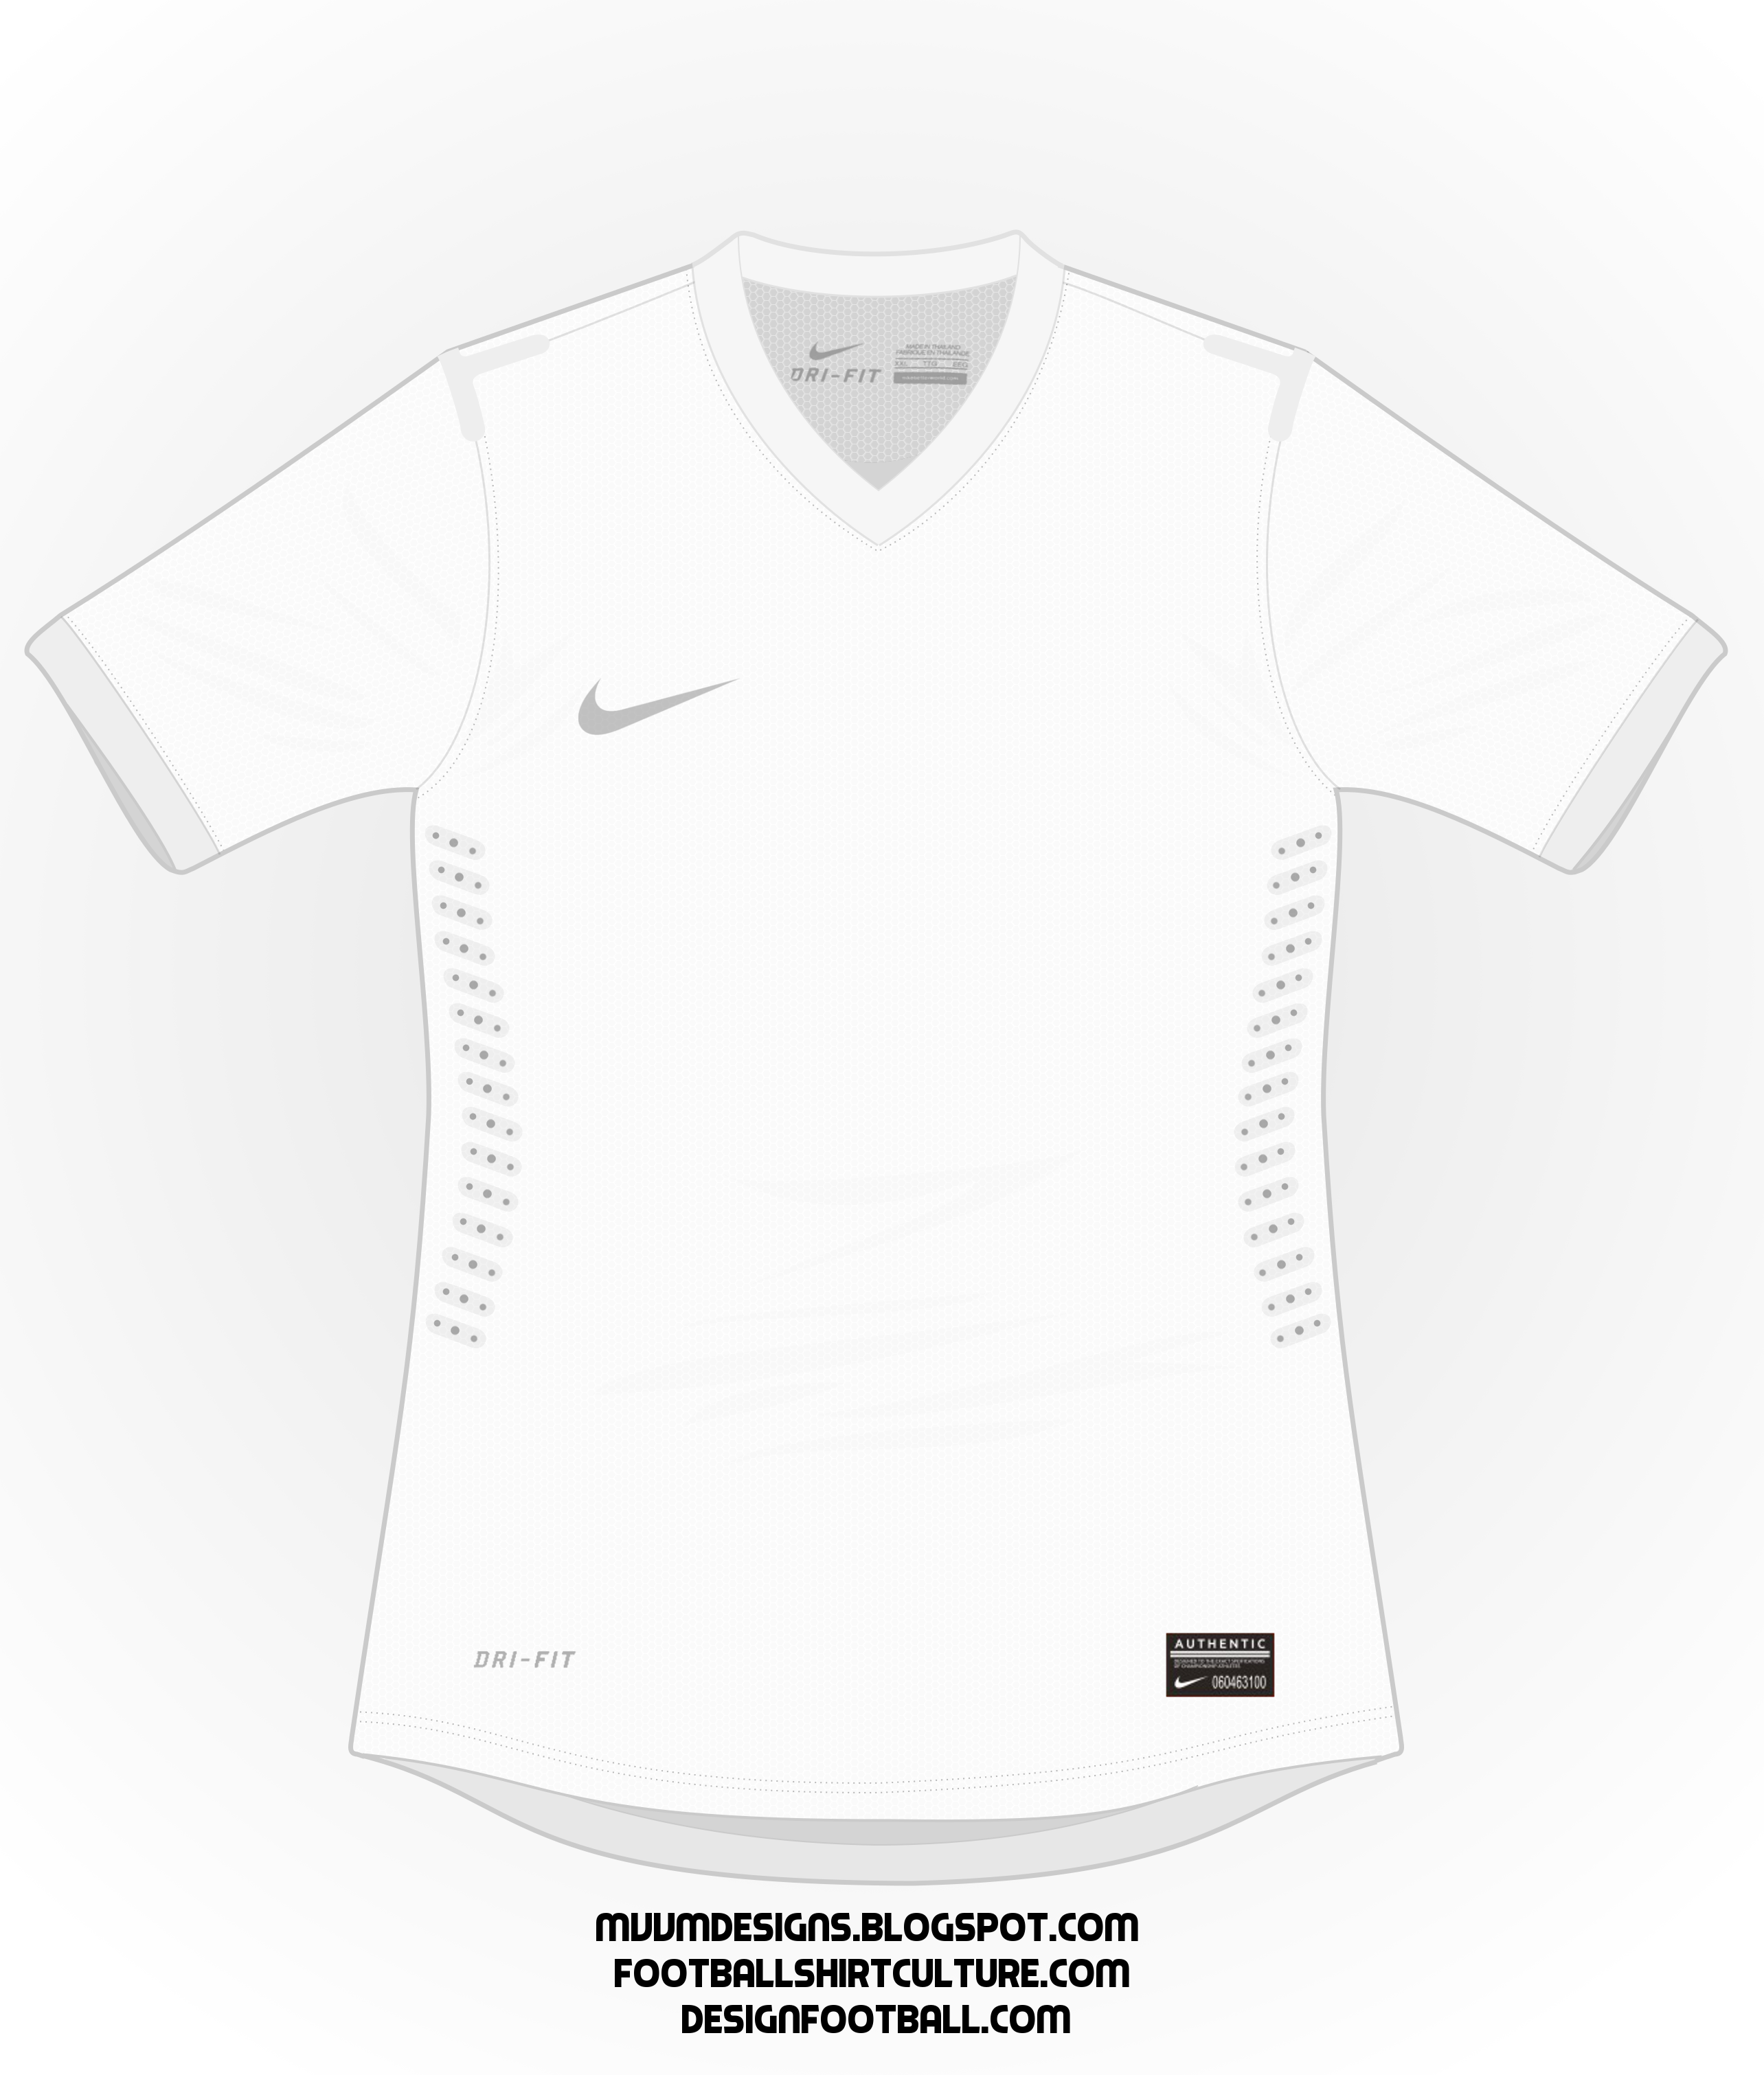 DesignFootball - Category: Football Kits - Image: [FREE TEMPLATE ...